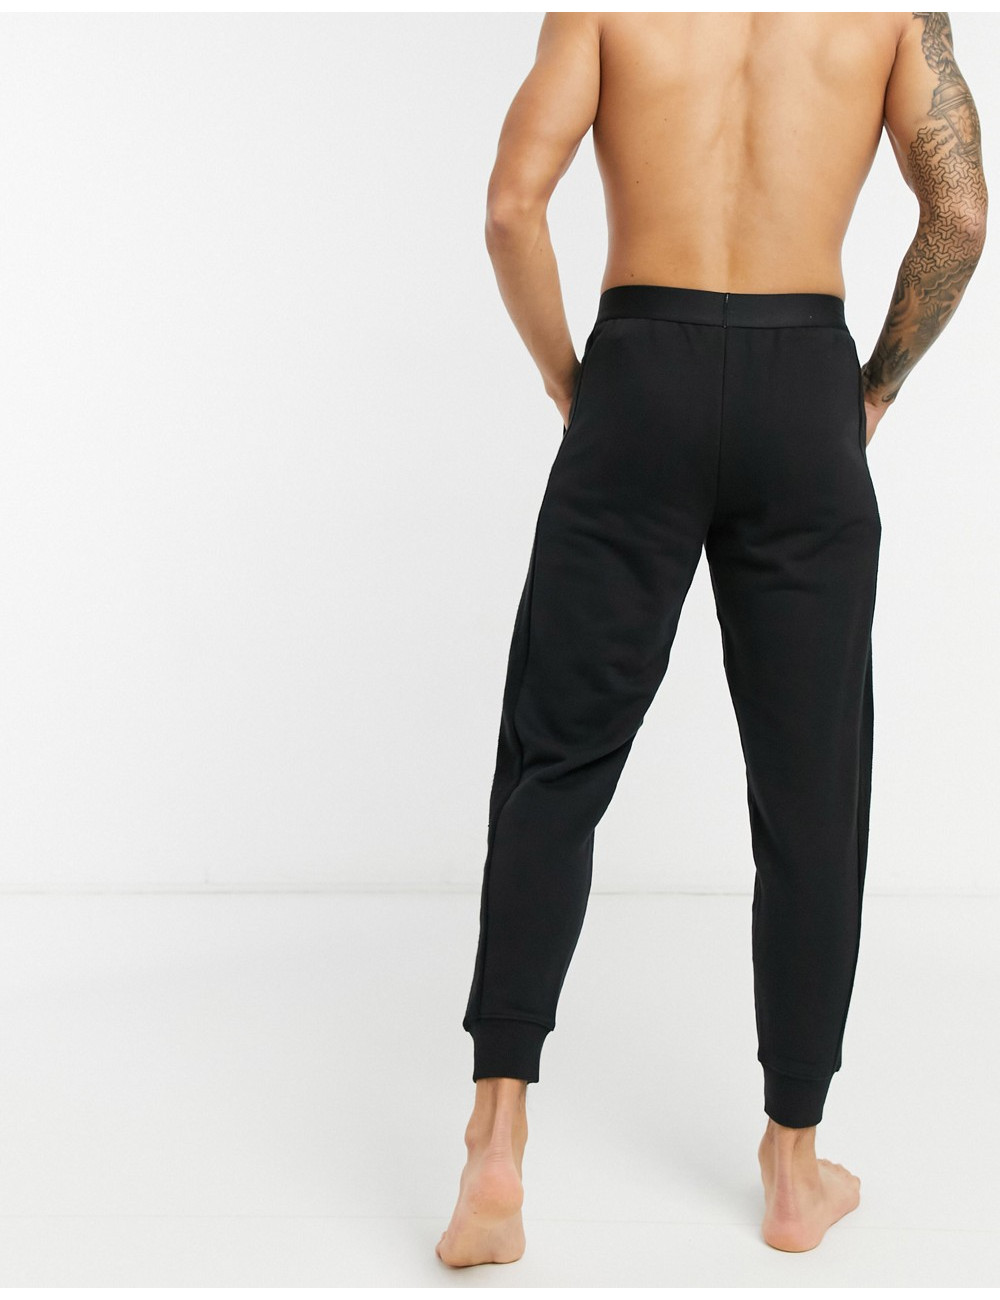 Calvin Klein jogger in black